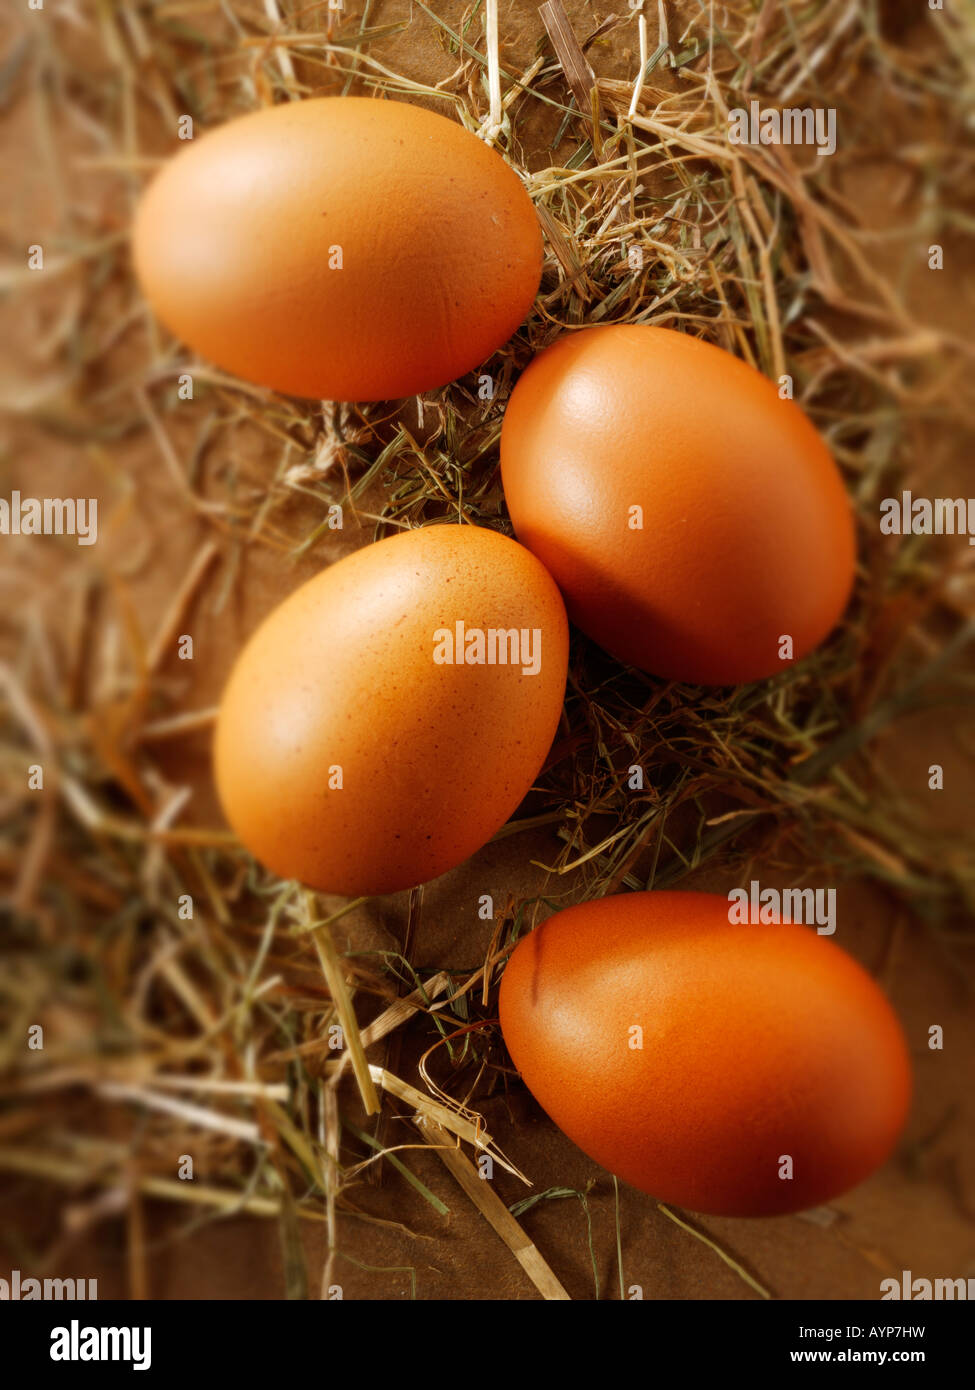 Burford organica marrone free range uova di gallina Foto Stock